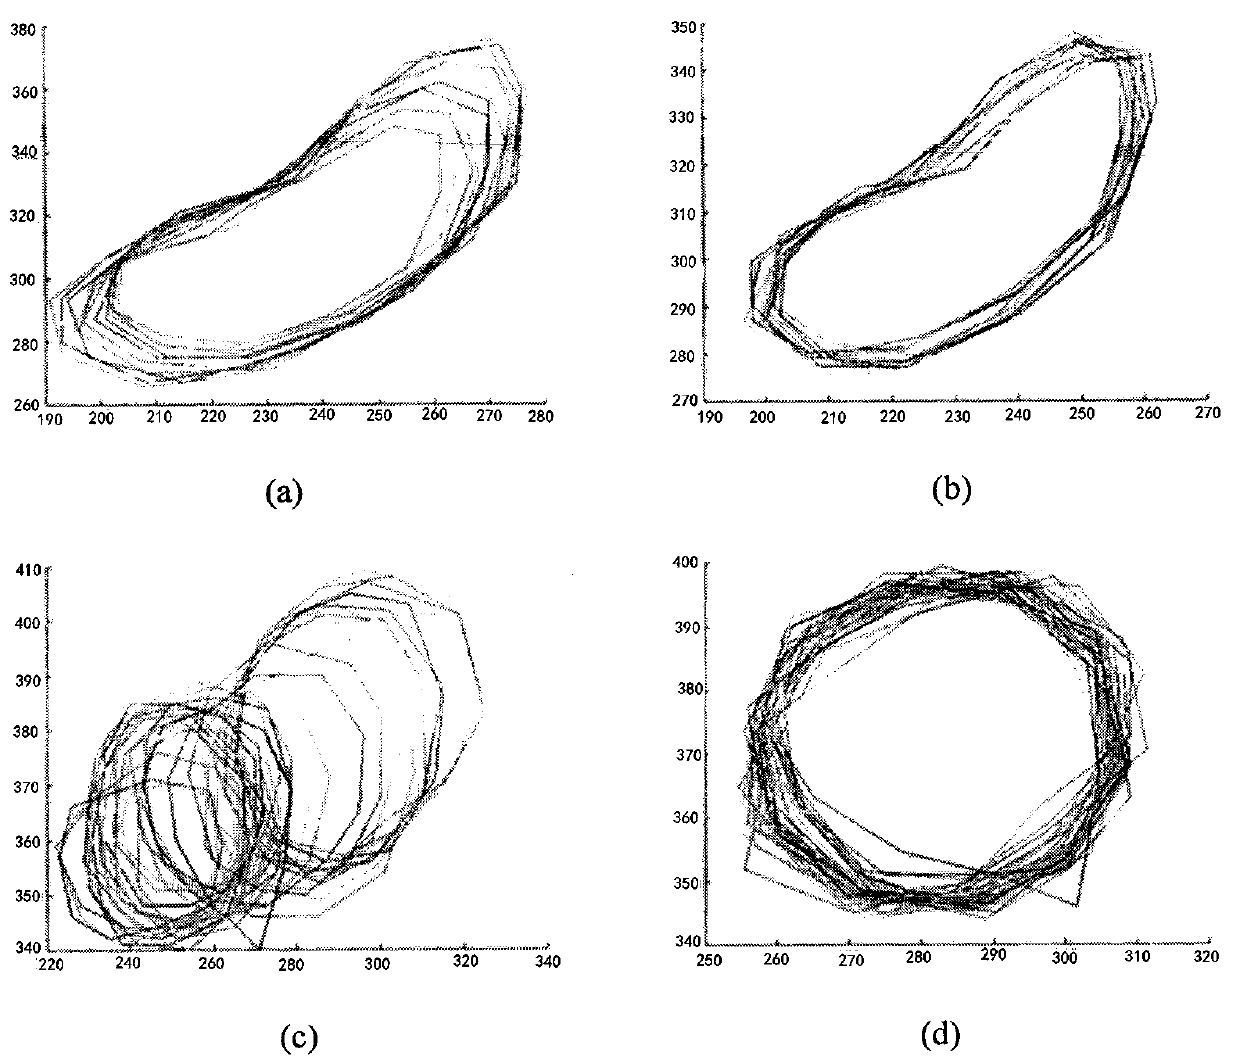 An Improved CT image aorta segmentation method based on an active shape model